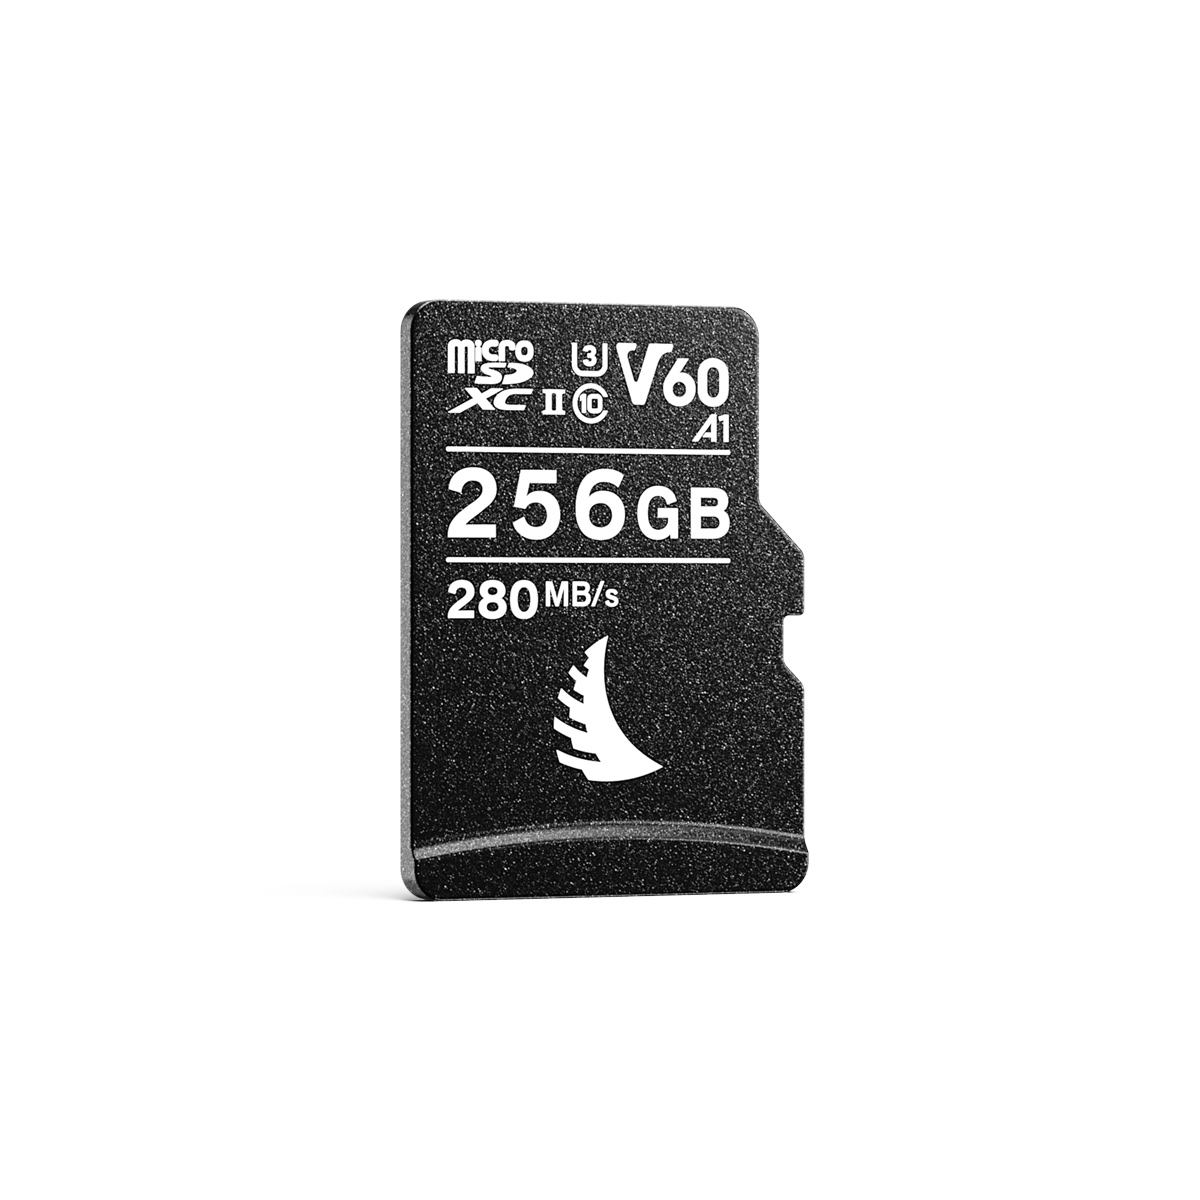 Карта памяти 256Gb AV PRO MicroSD V60 (запись/чтение 280/160MB/s)